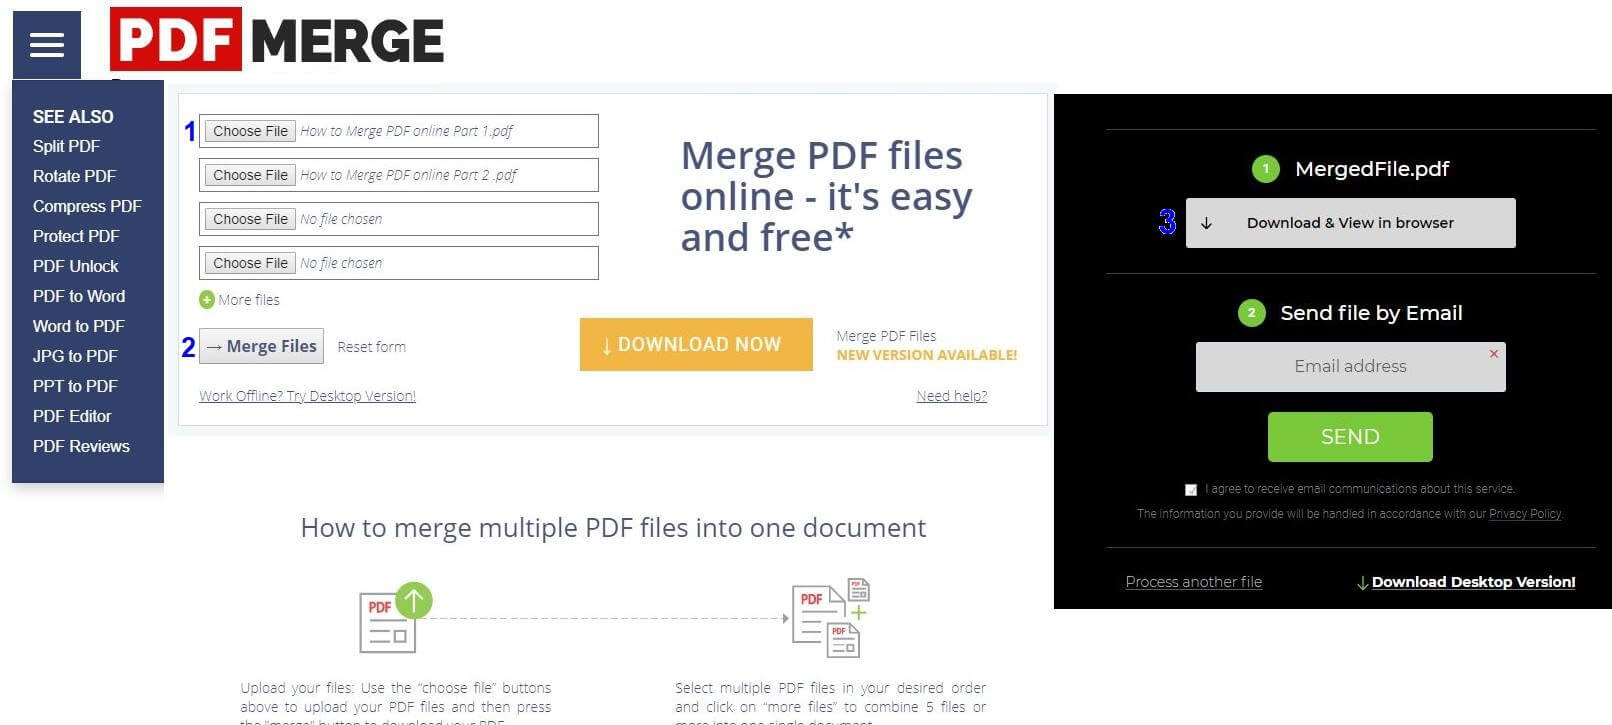 online free pdf merger software